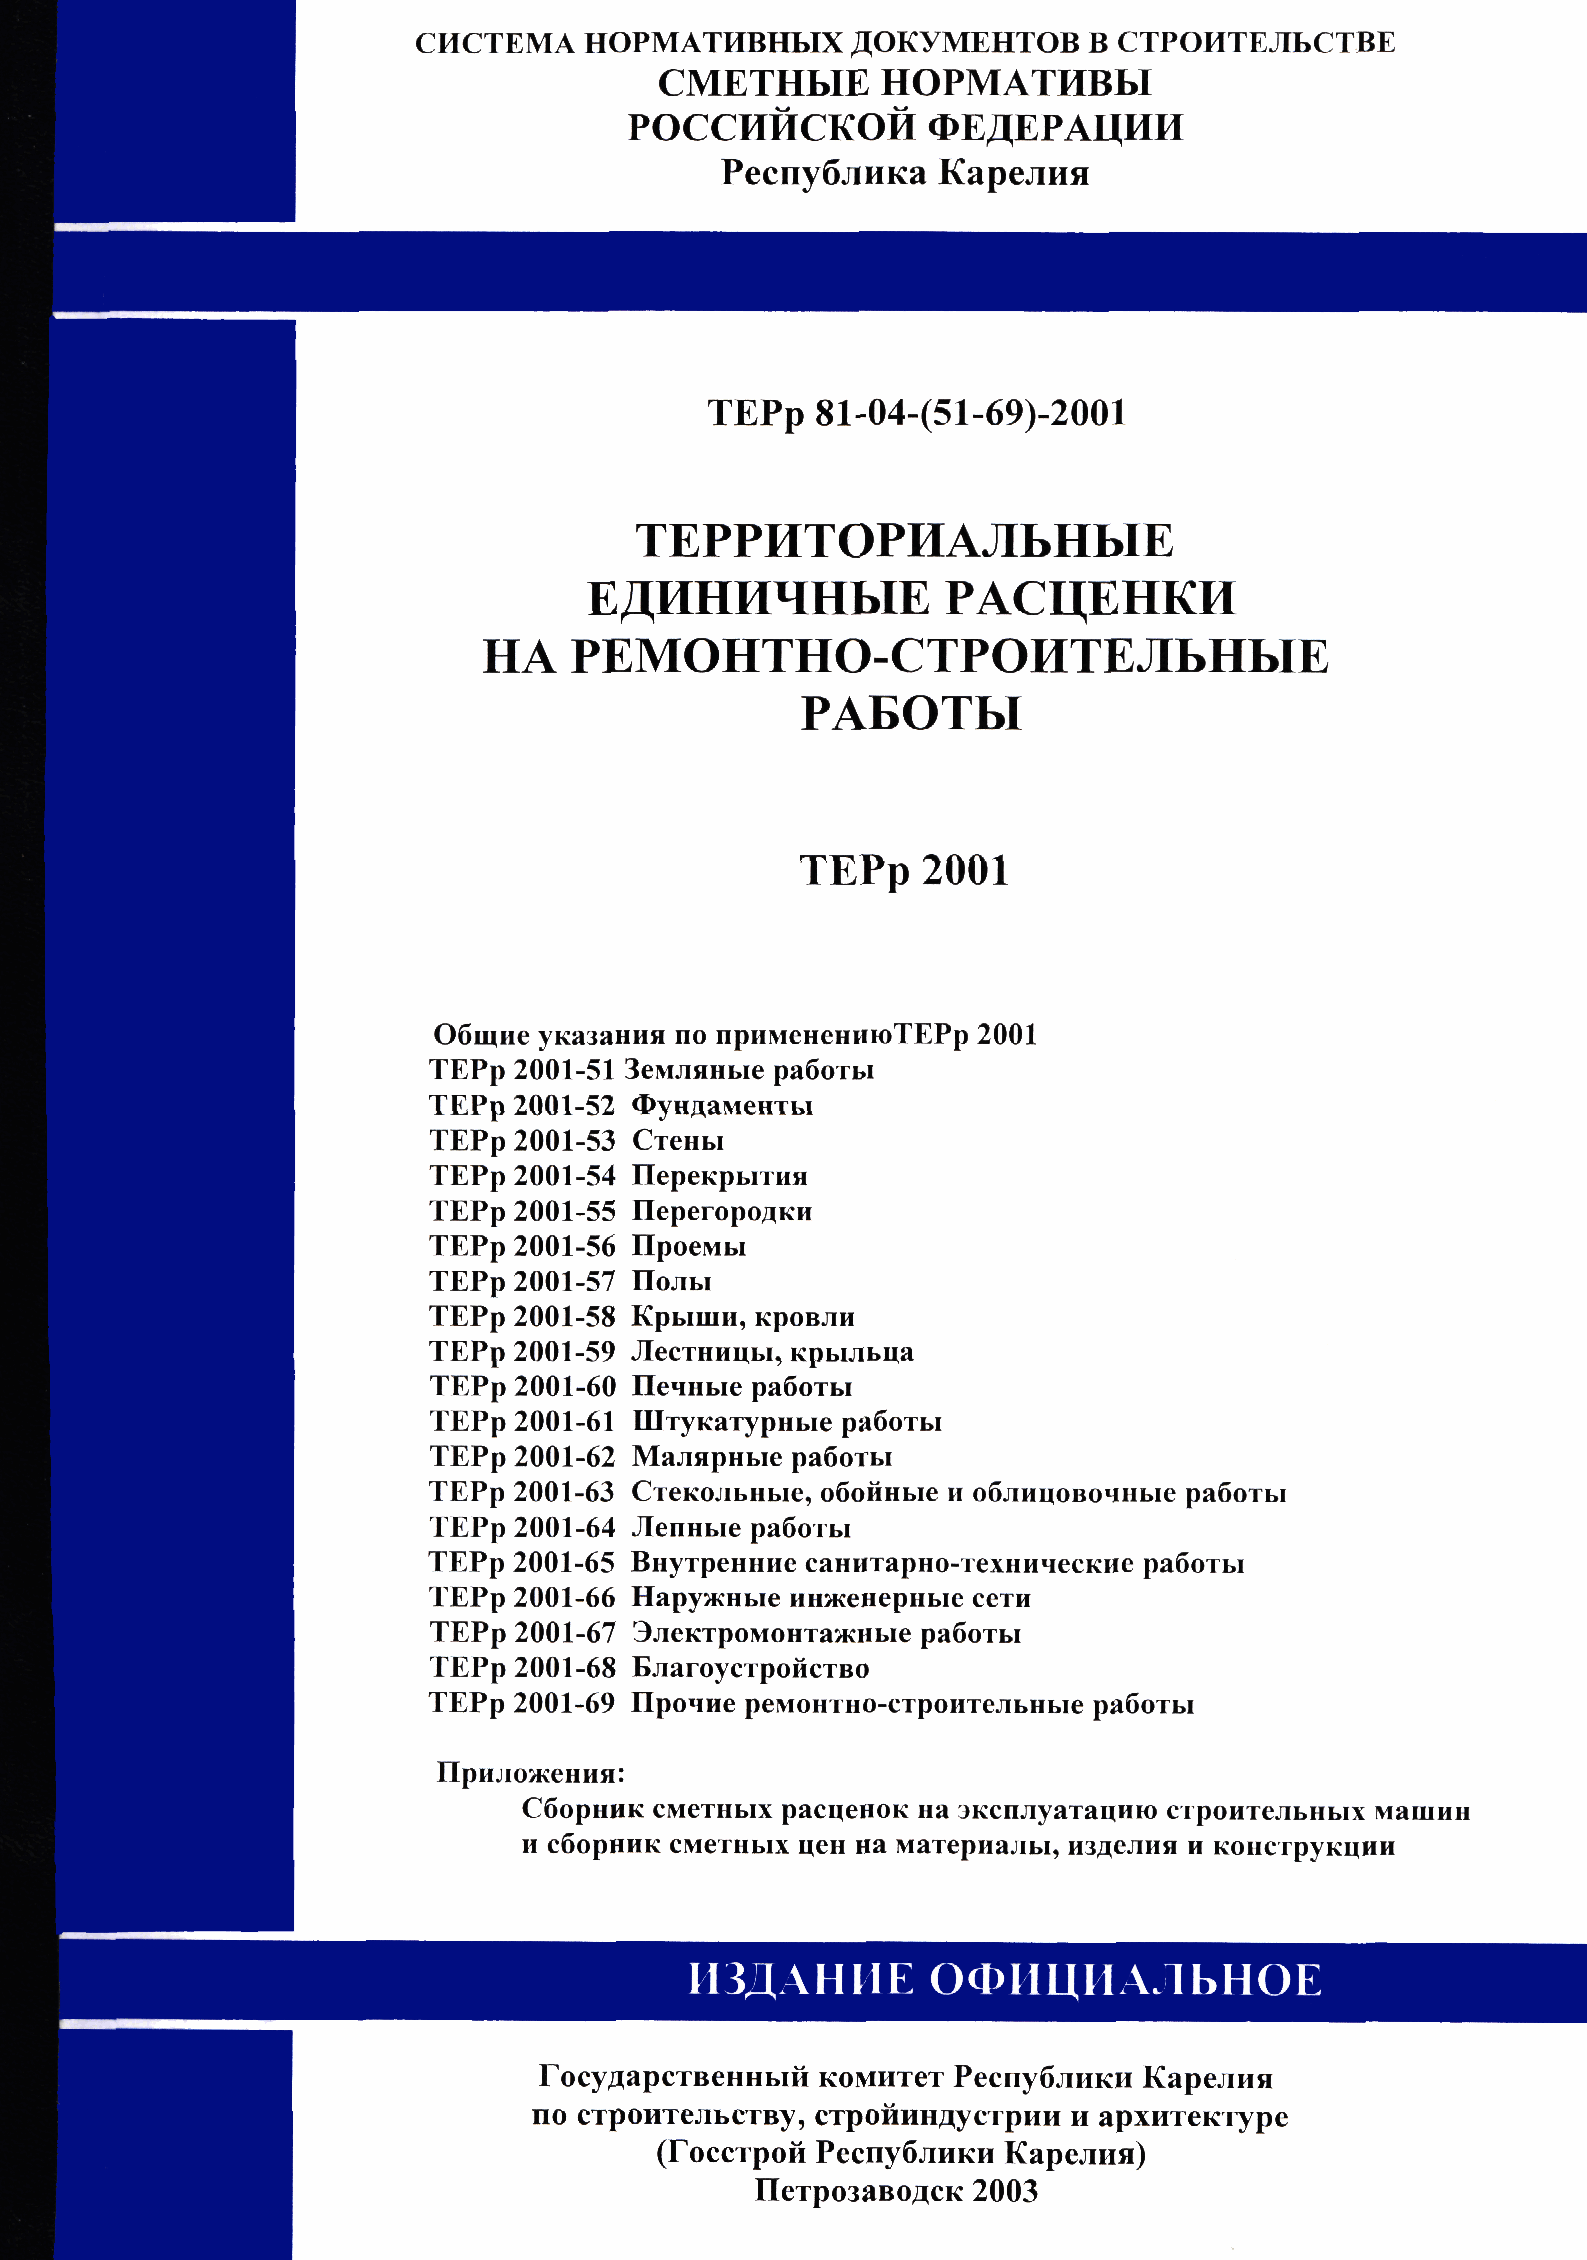 ТЕРр Республика Карелия 2001-69